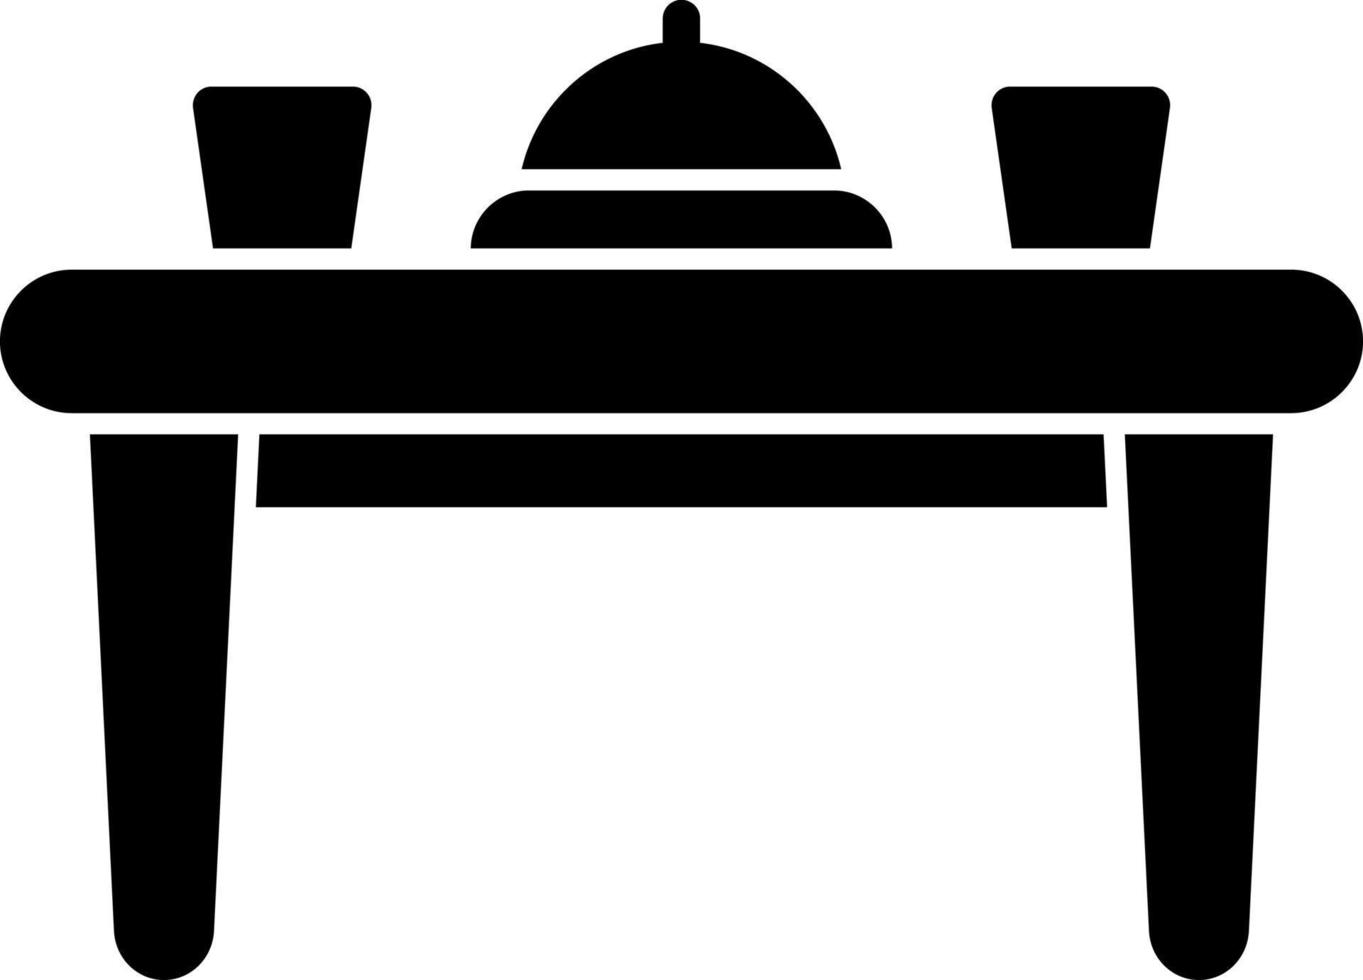 design de ícone de vetor de mesa